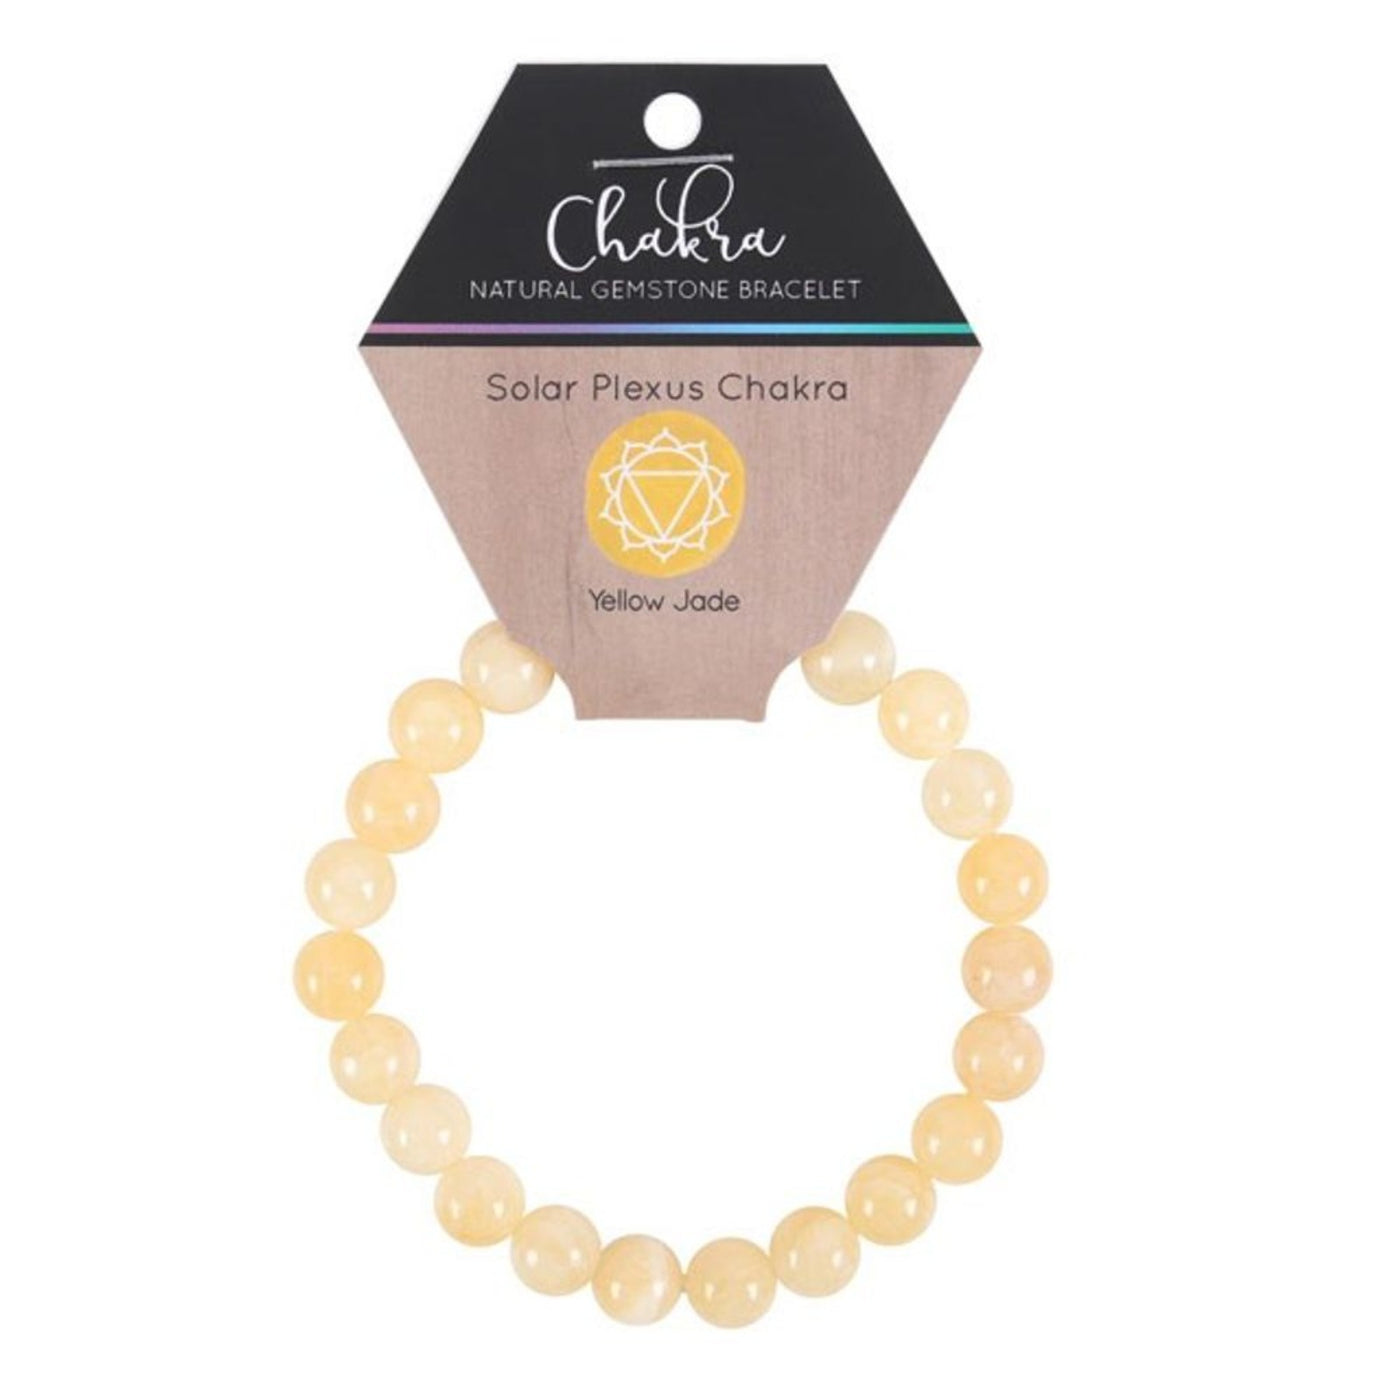 Unisex Solar Plexus Chakra Yellow Jade Gemstone Bracelet.